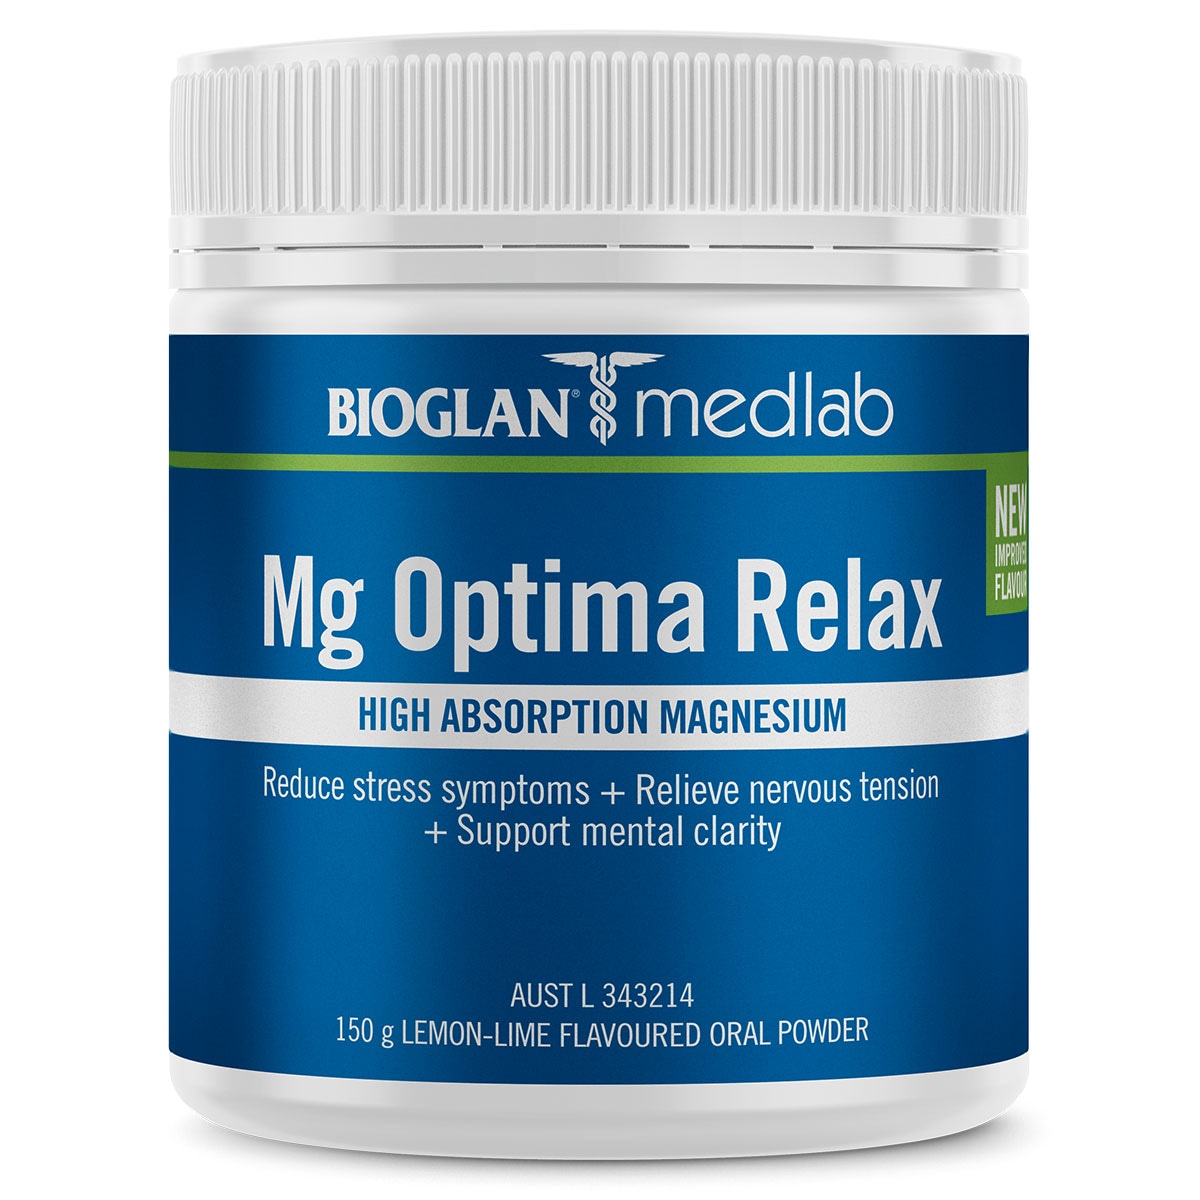 Medlab Mg Optima Relax Lemon-Lime Powder 150g